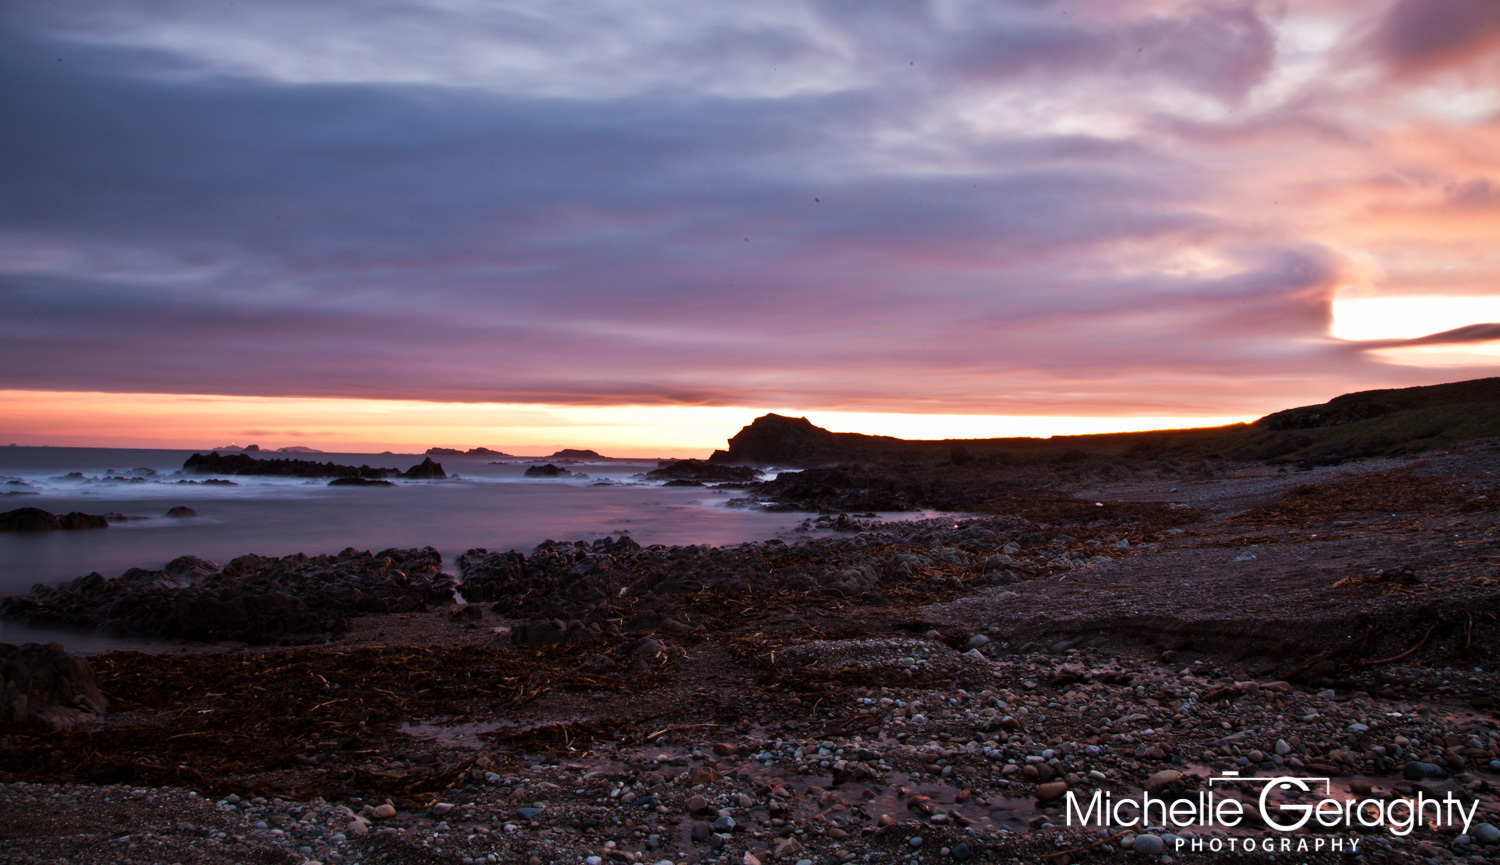 Sunrise over Malin Head, Co. Donegal, Ireland